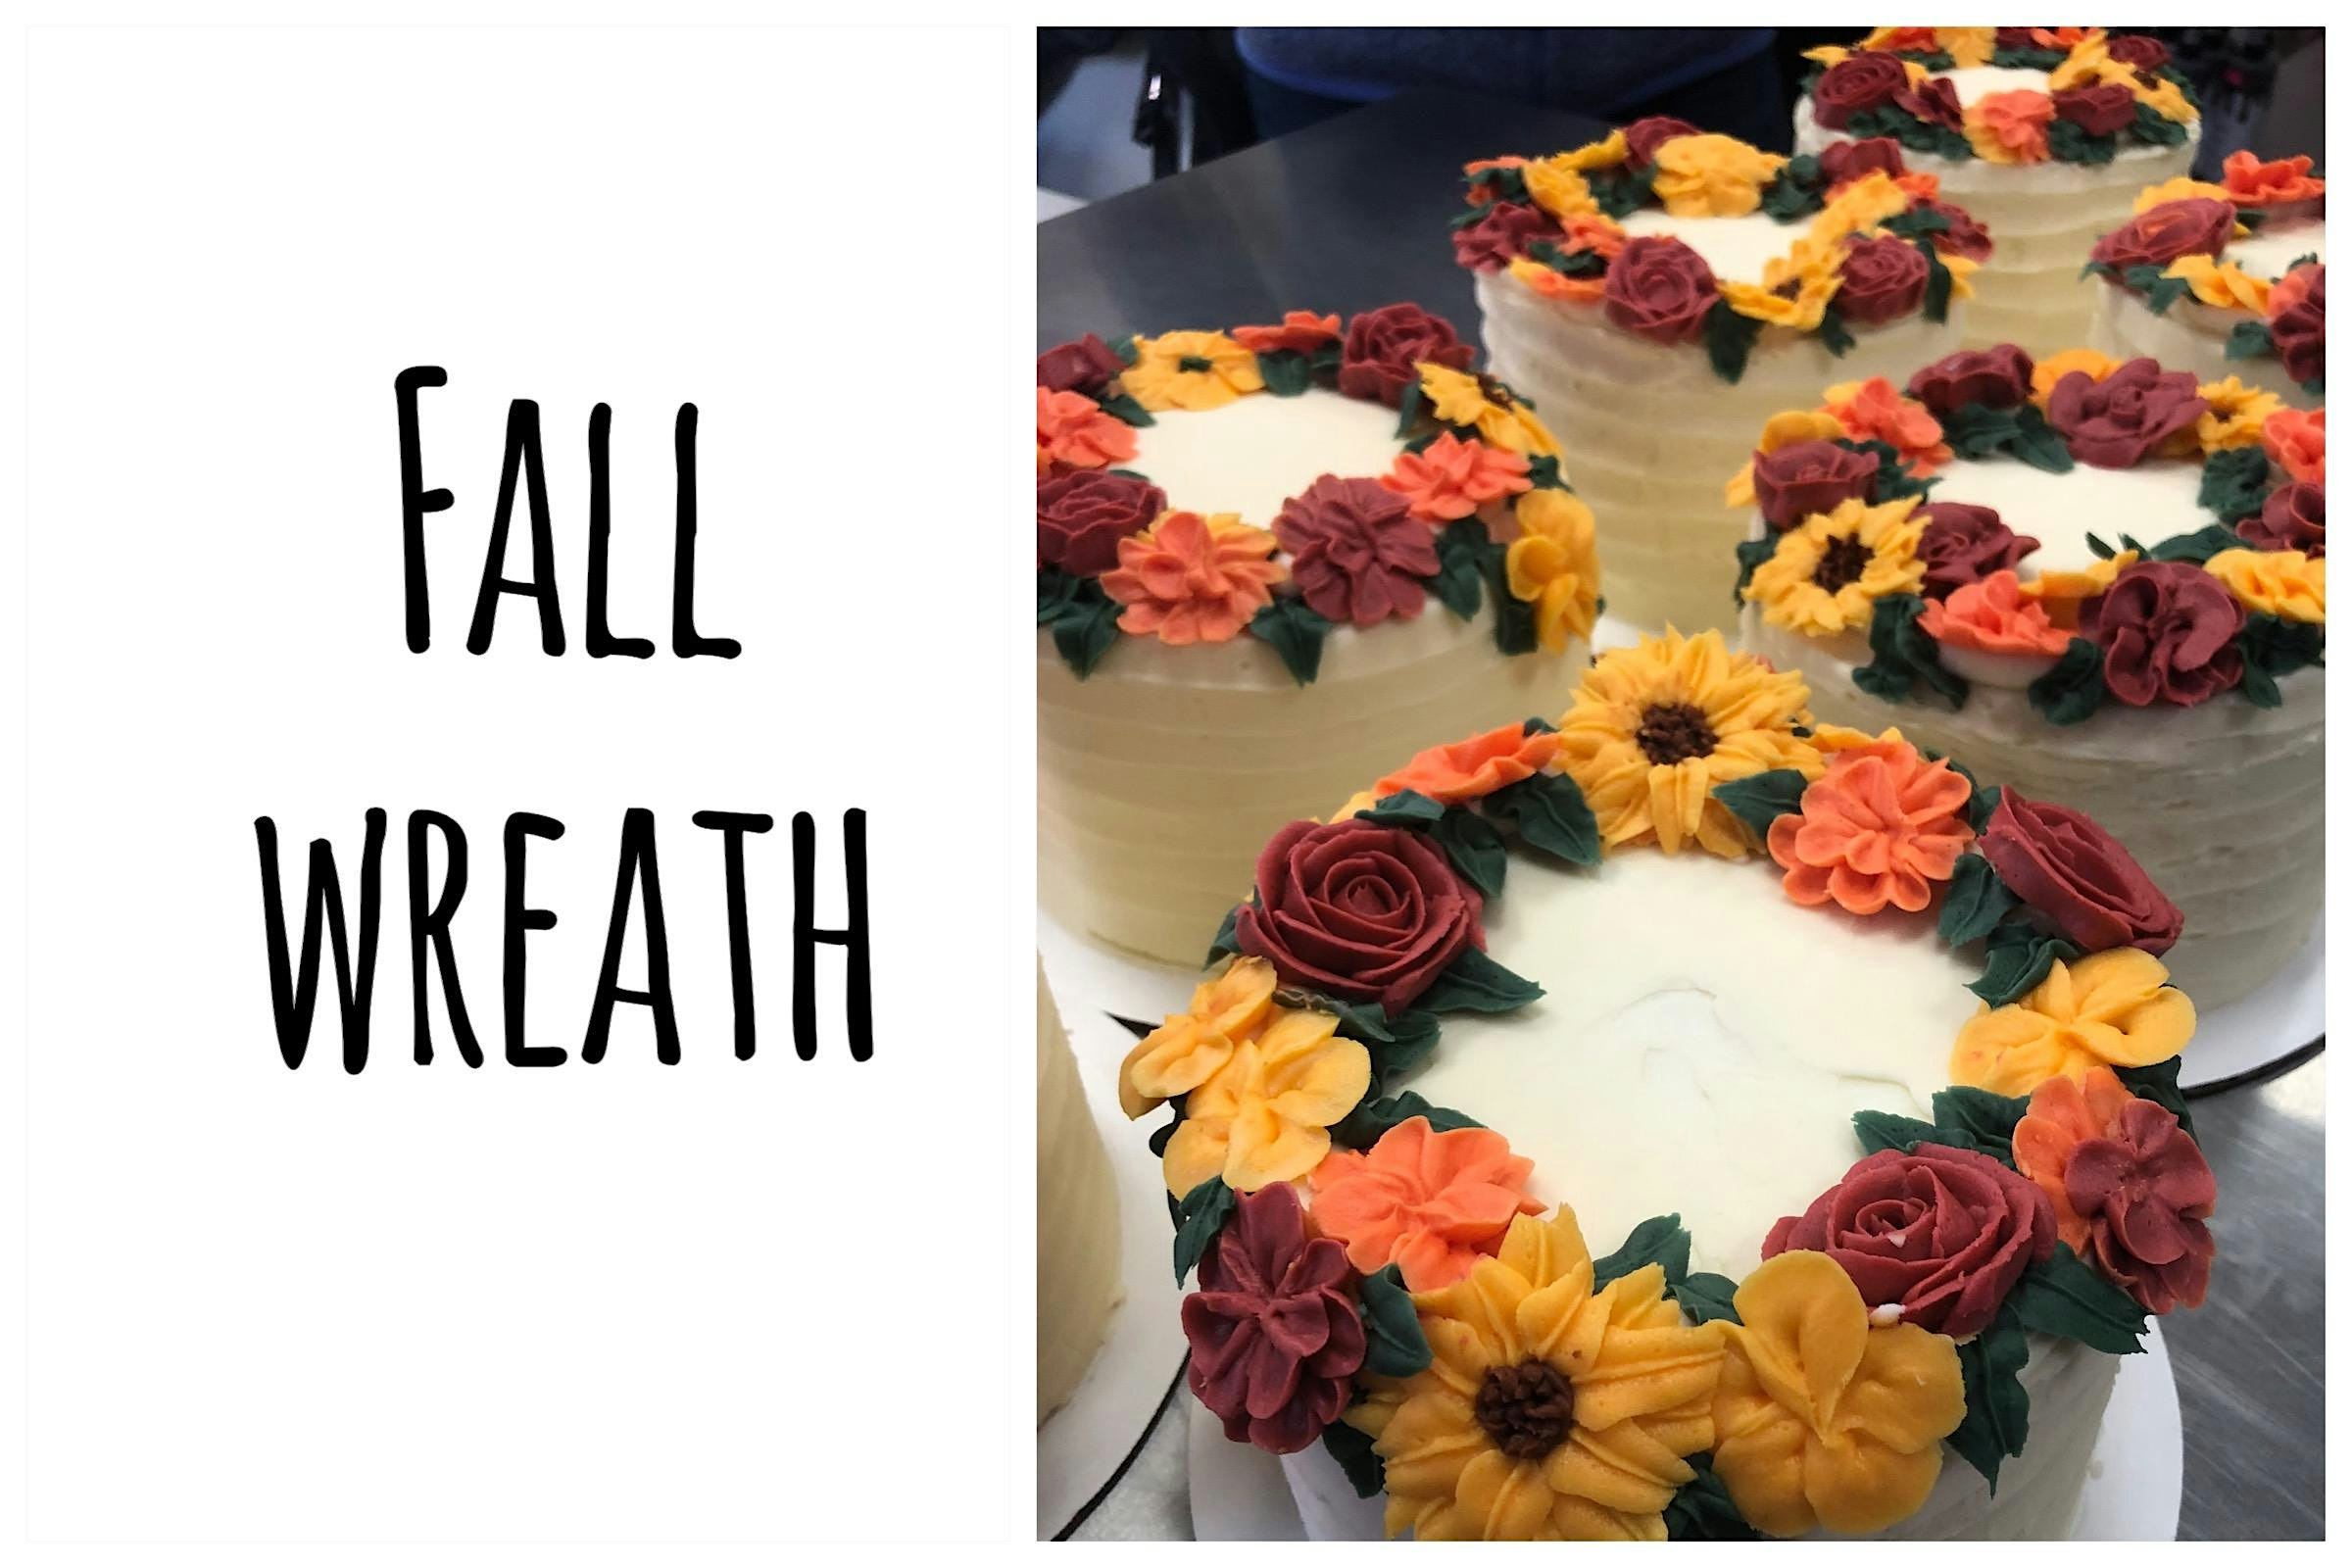 Fall Wreath Cake Decorating Class